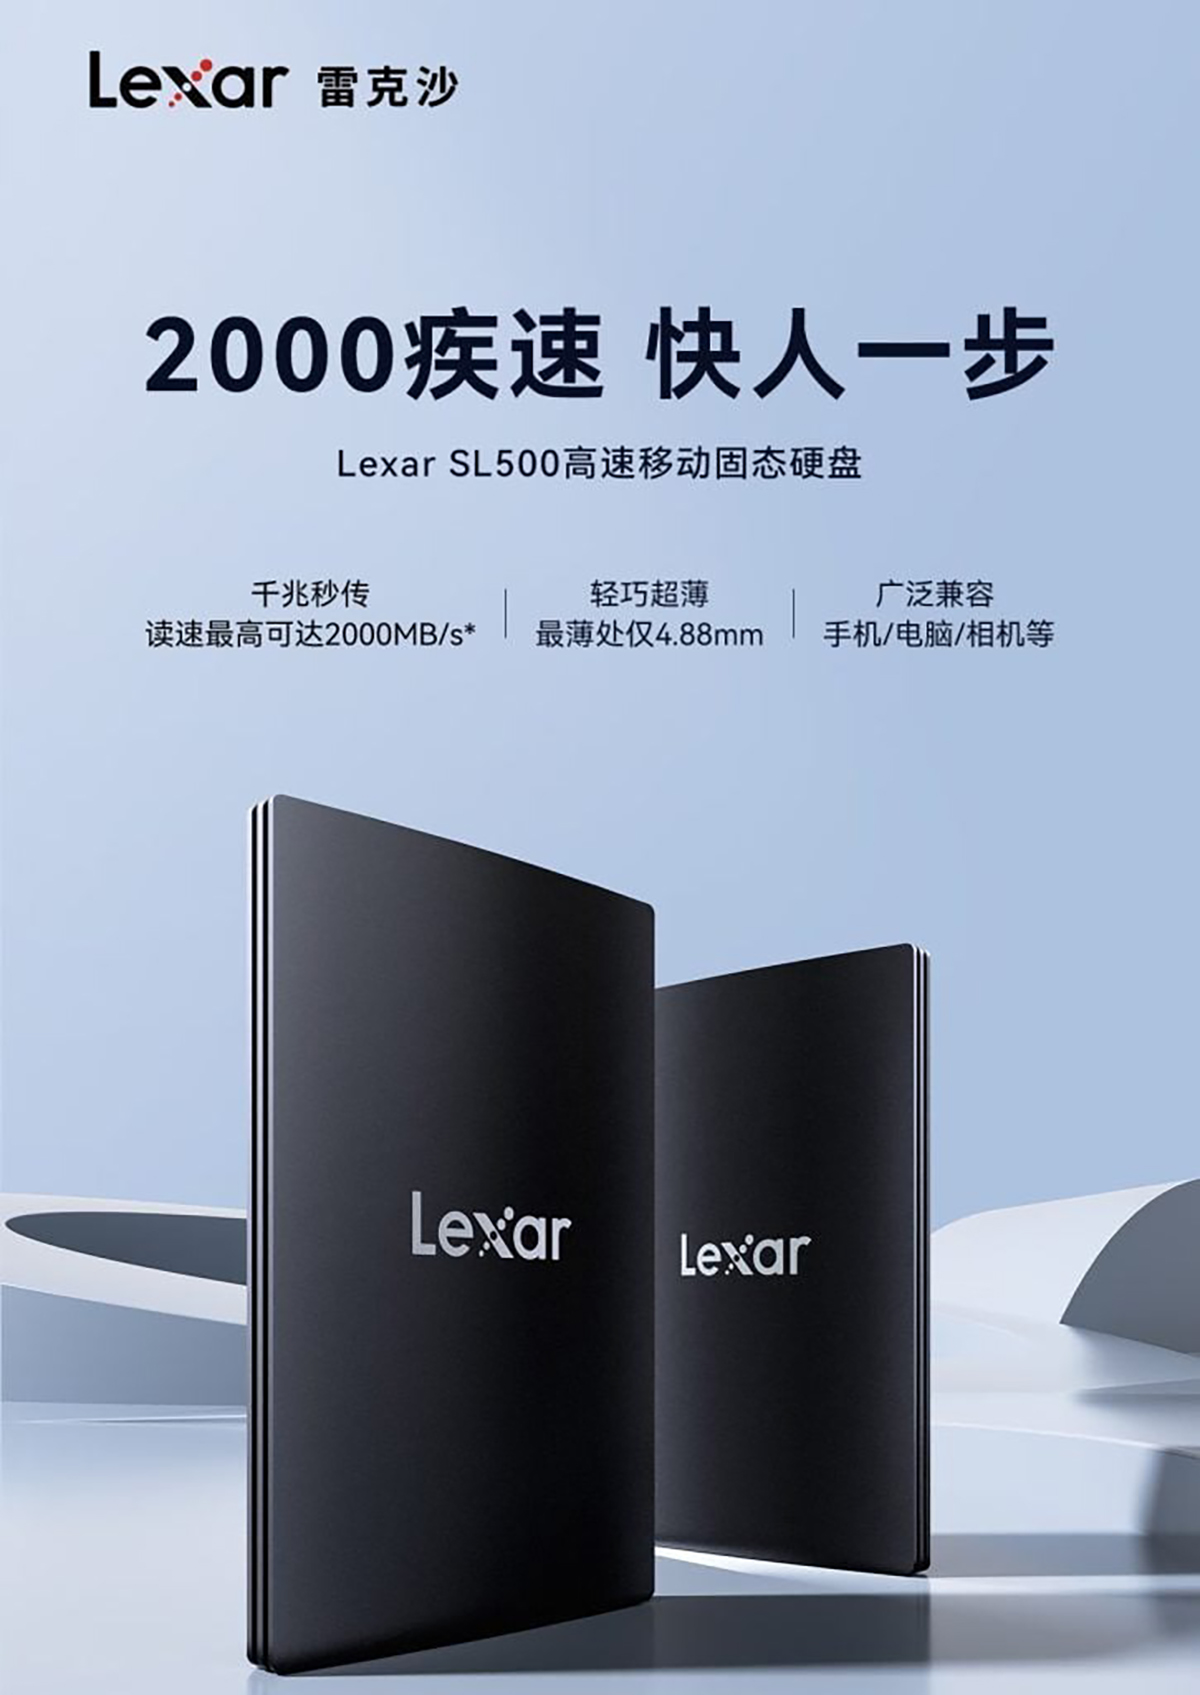 Lexar ra mắt SL500 Mobile SSD